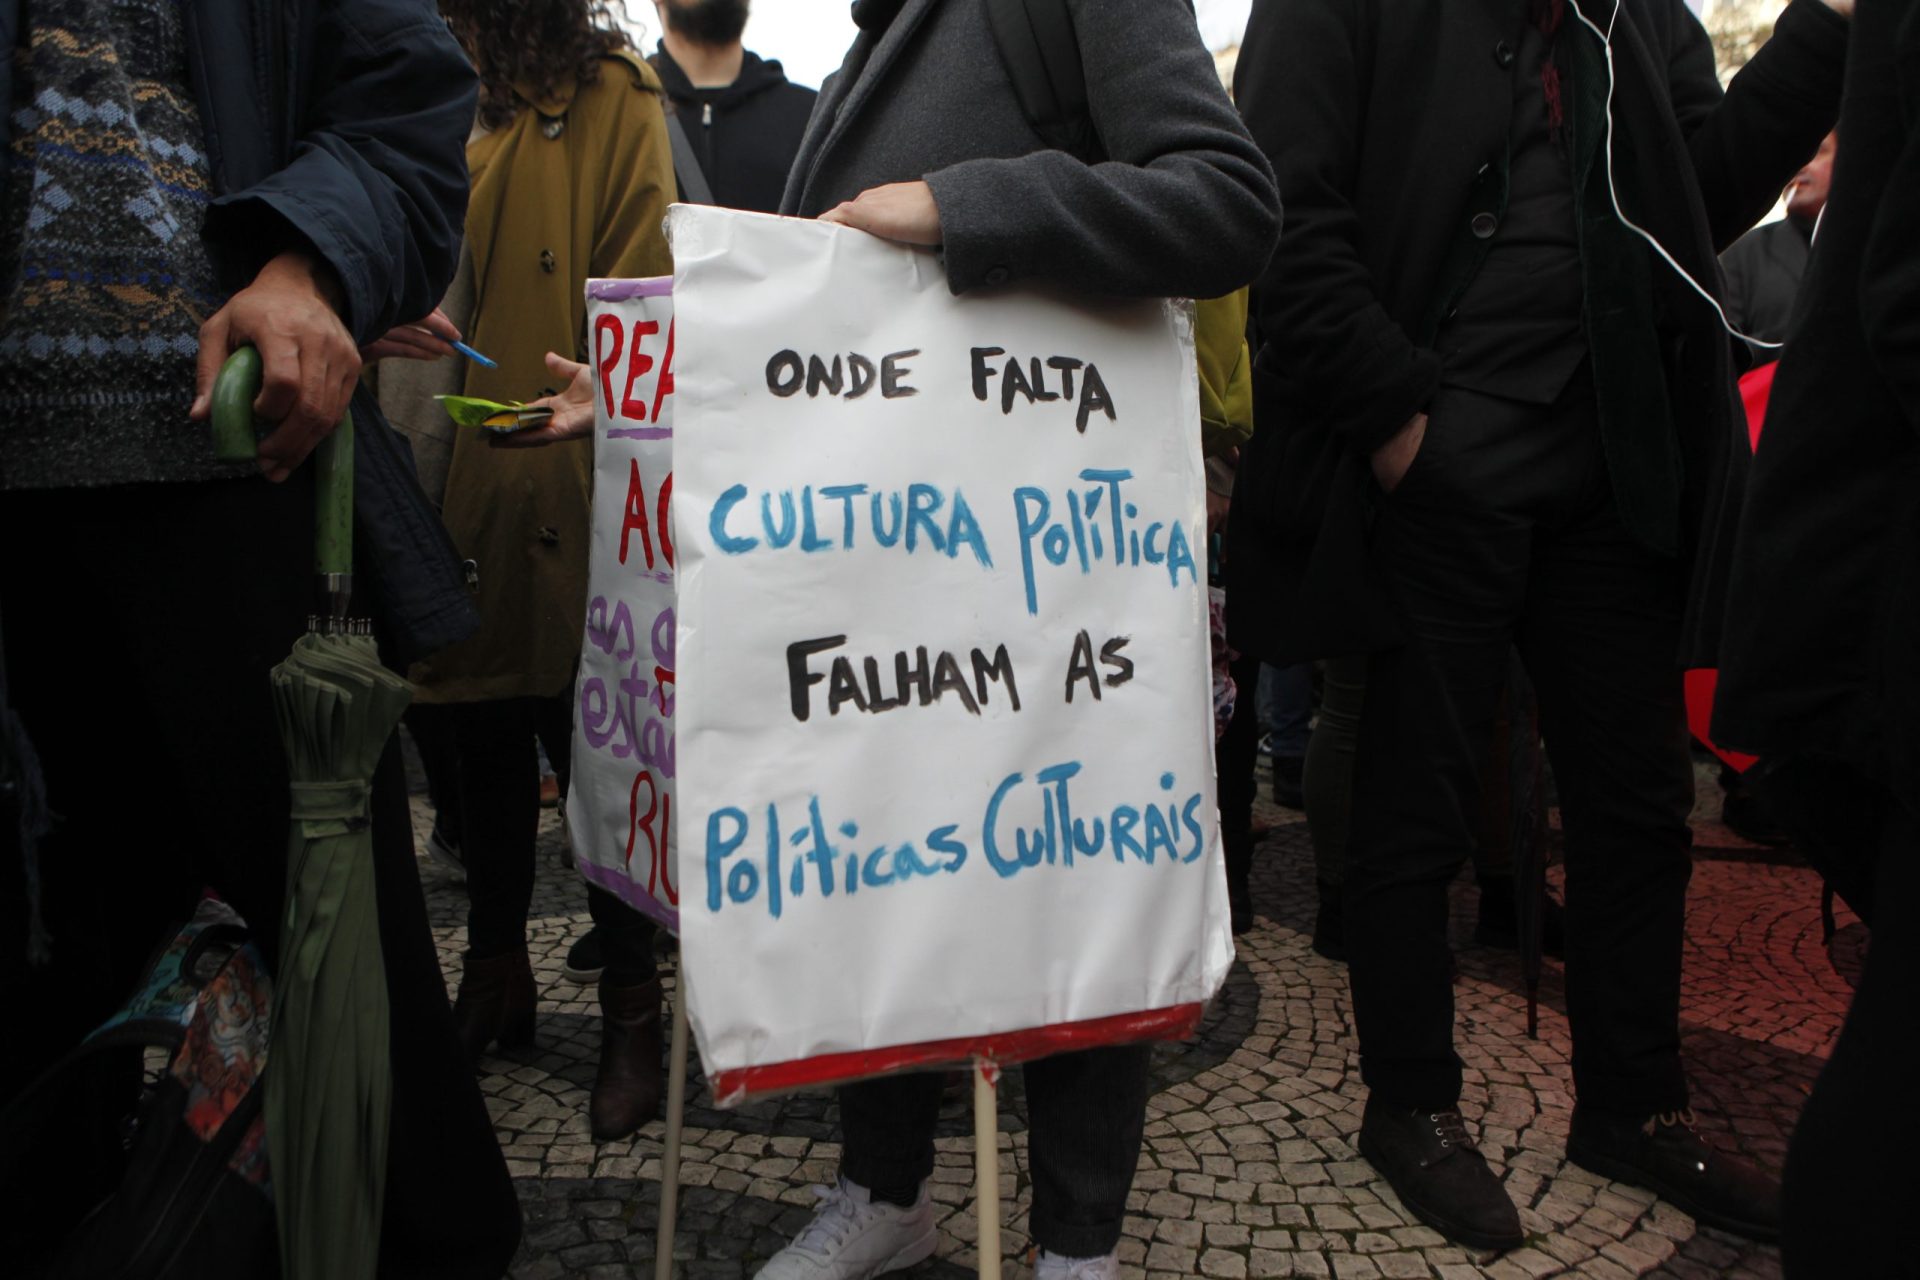 Protesto pela cultura |FOTOGALERIA